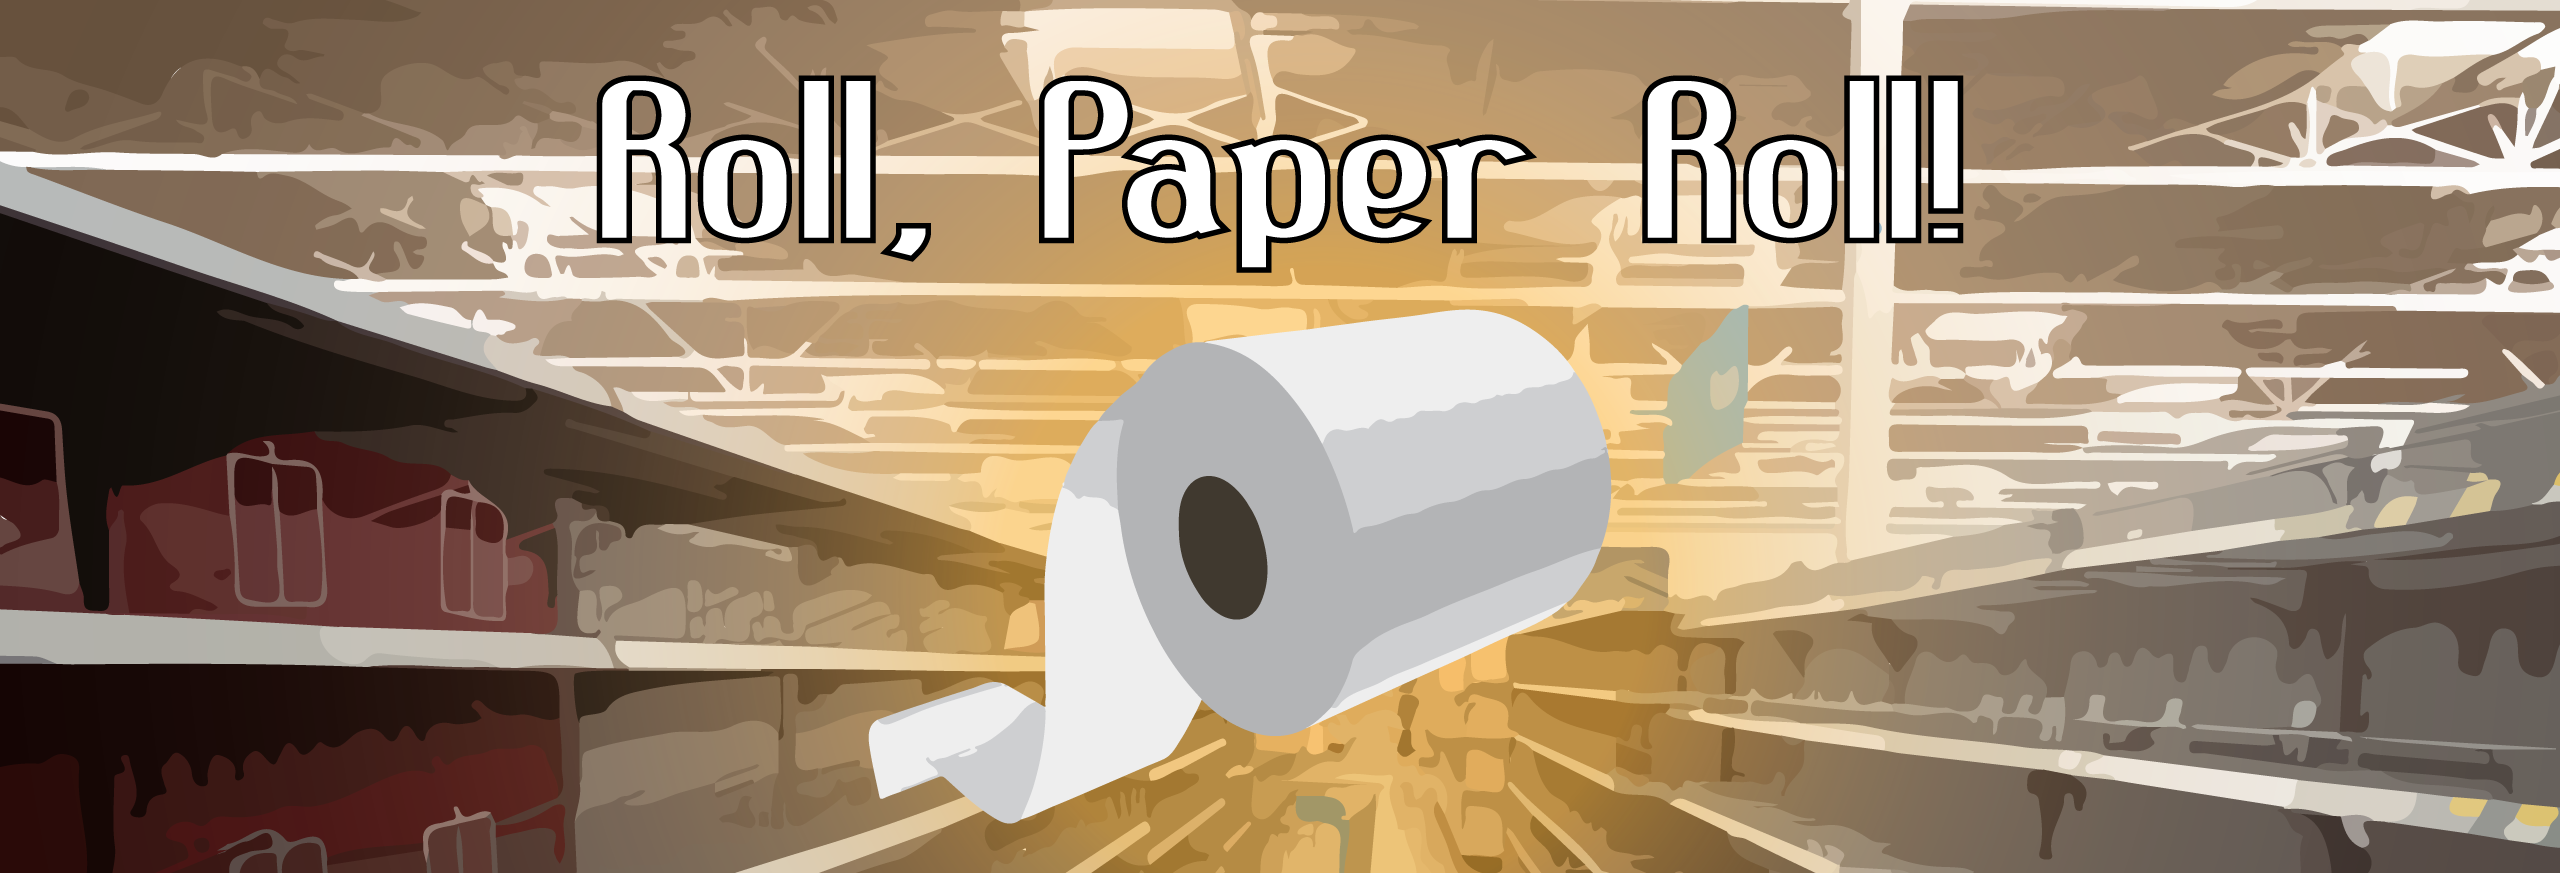 Roll, Paper Roll!